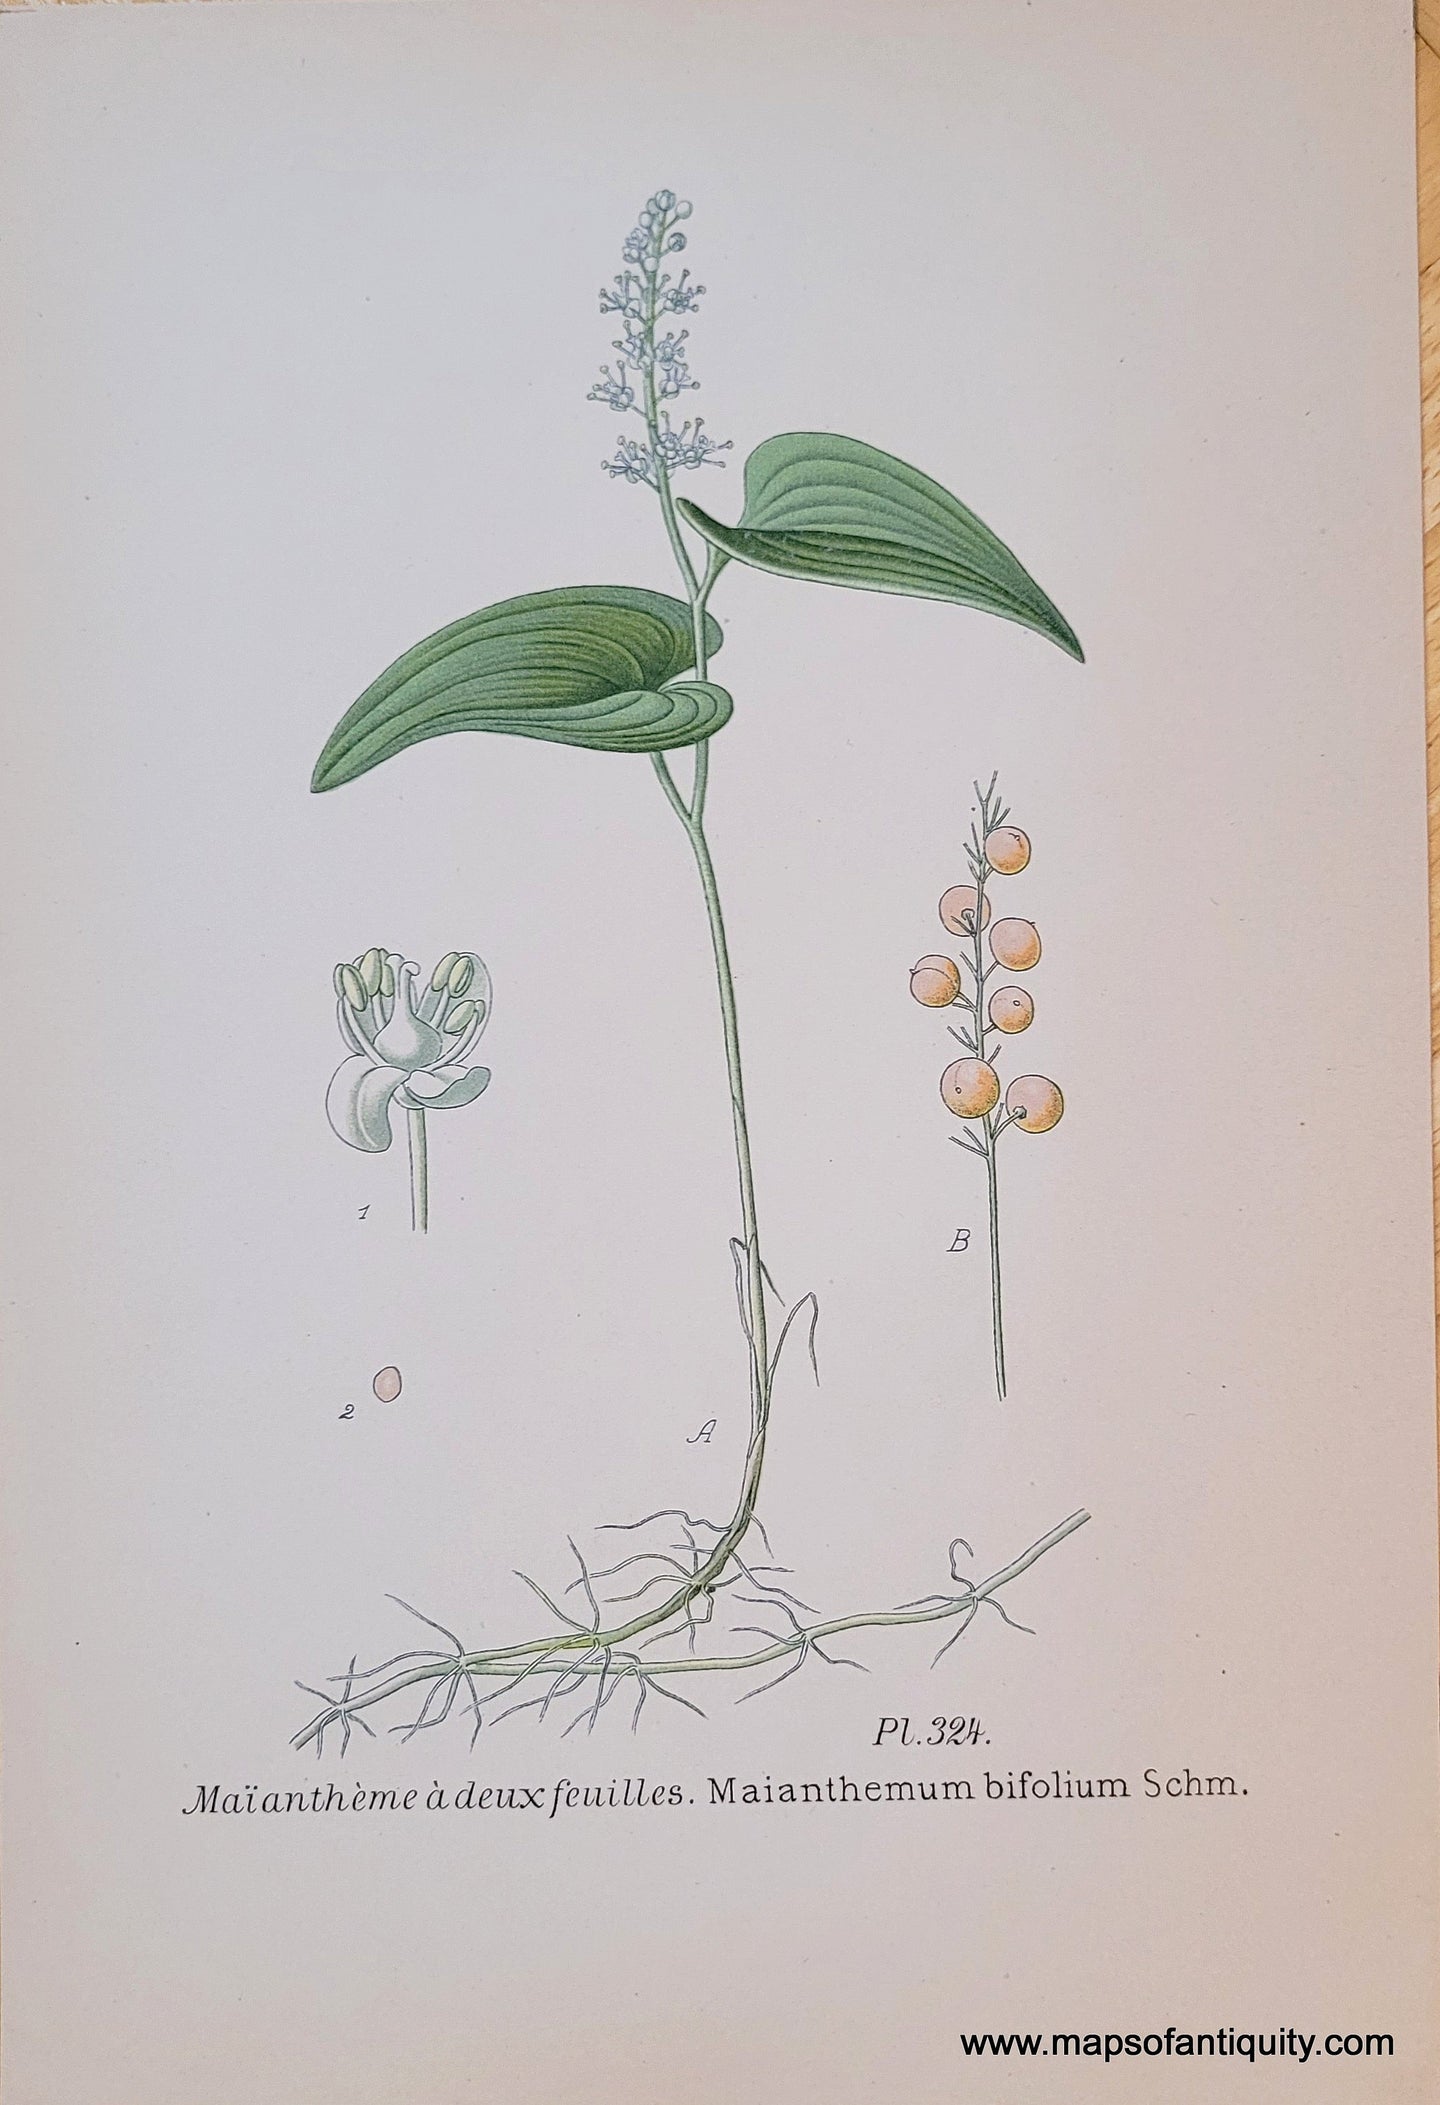 Genuine-Antique-Chromolithograph-Print-Maianthemum-bifolium-Schm--1891-Masclef-Bonnier-Maps-Of-Antiquity